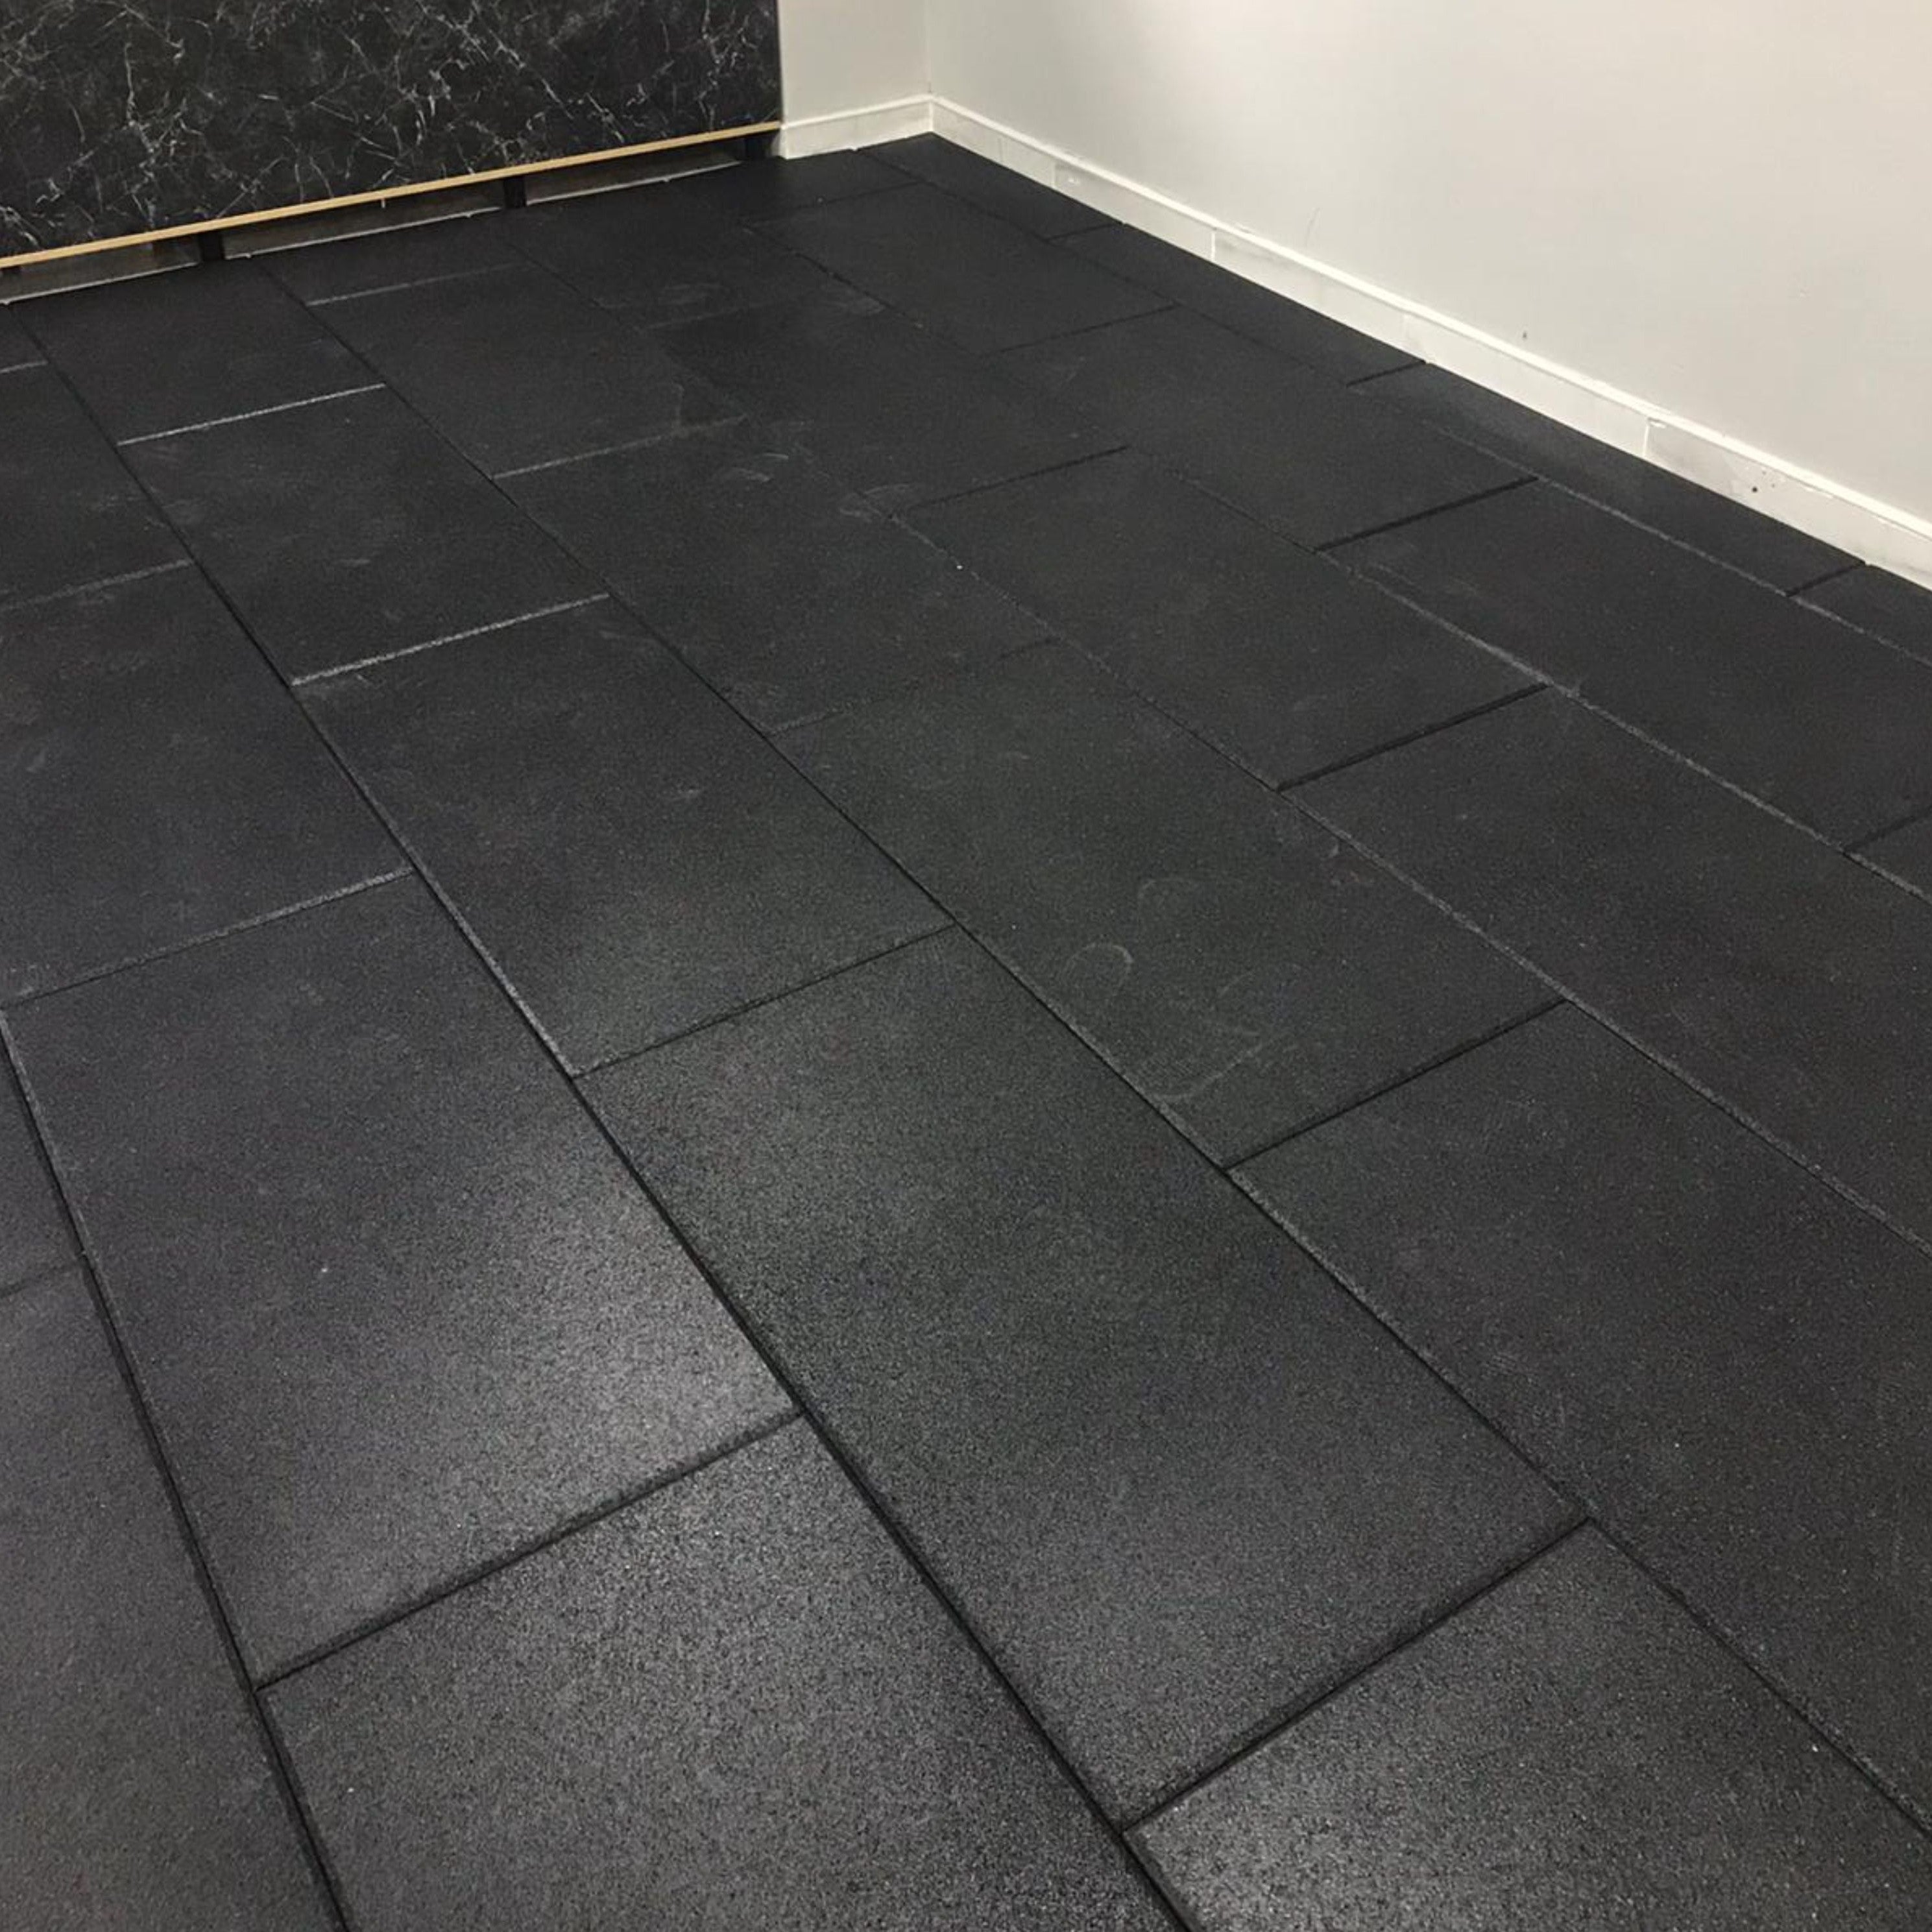 18m2 single garage package, BeFit Flatline Black Rubber Gym Flooring - Cannons UK